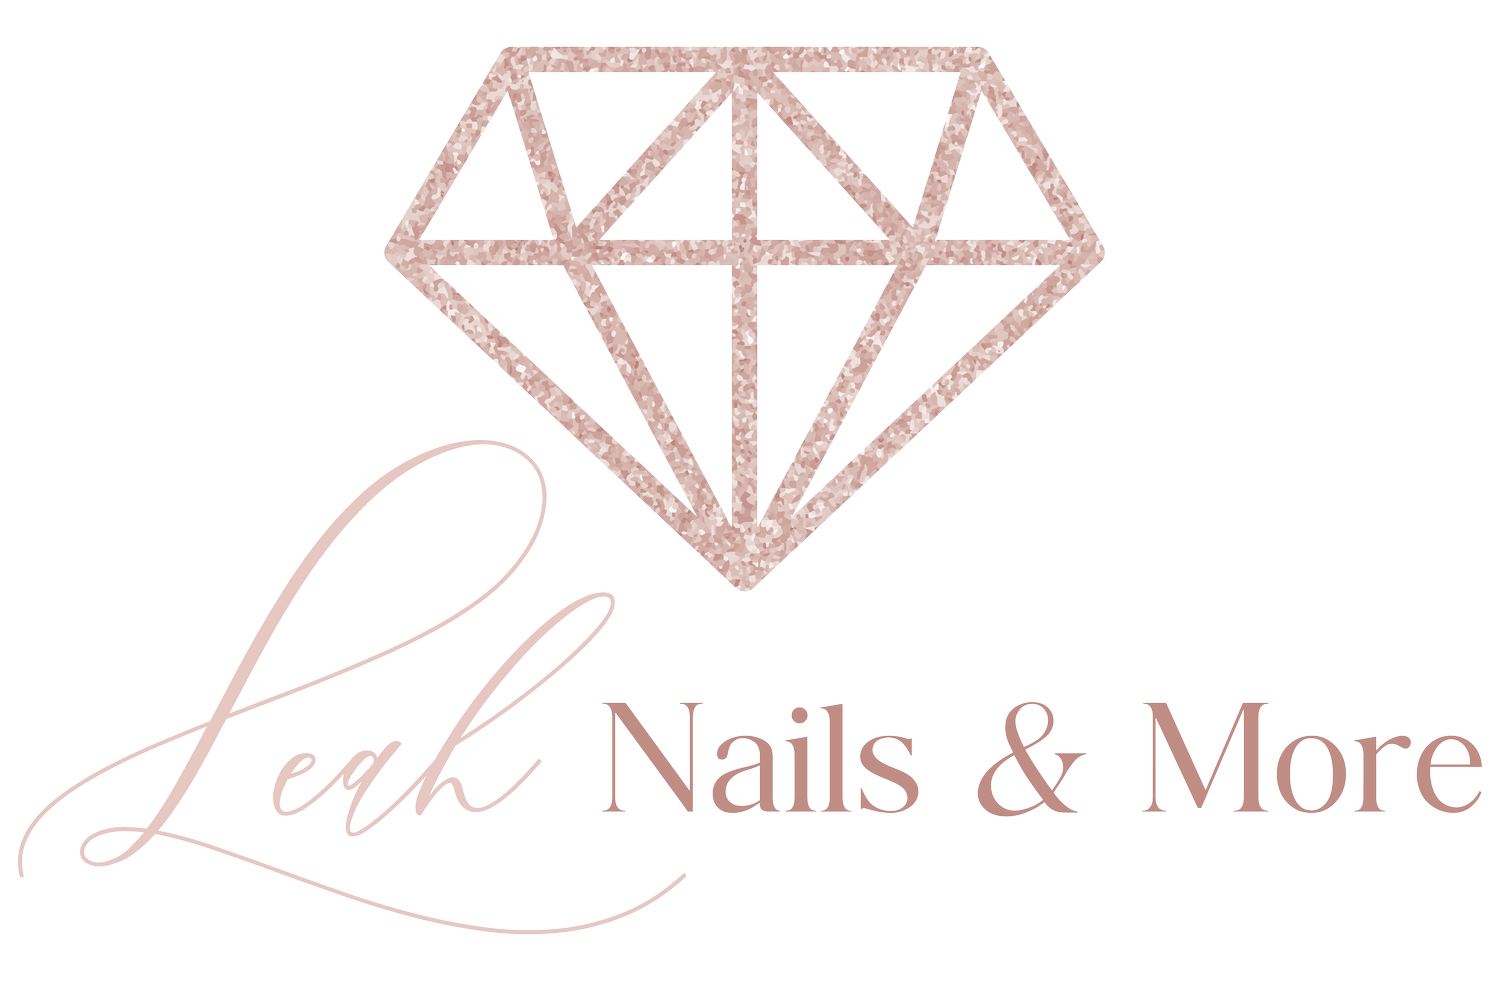 Leah Nails and More